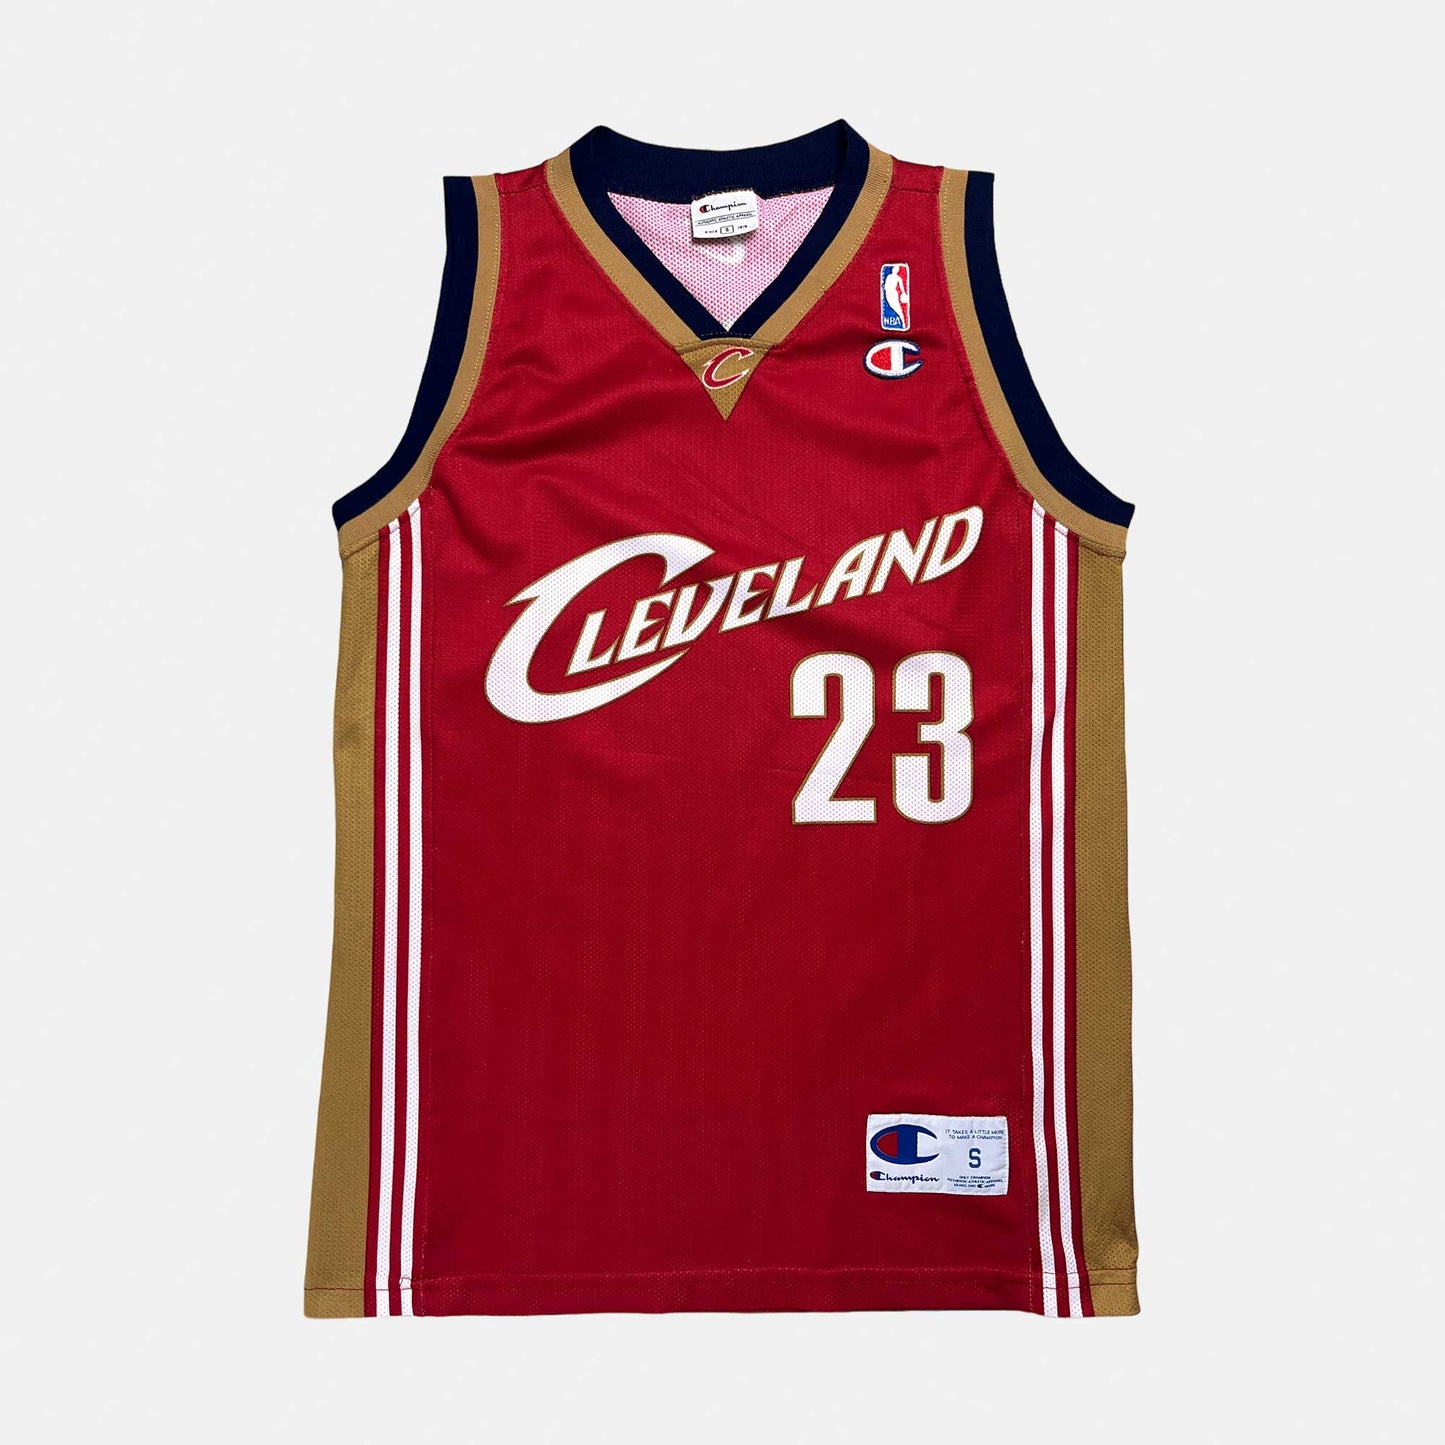 Cleveland Cavaliers - Lebron James - Größe S - Champion - NBA Trikot